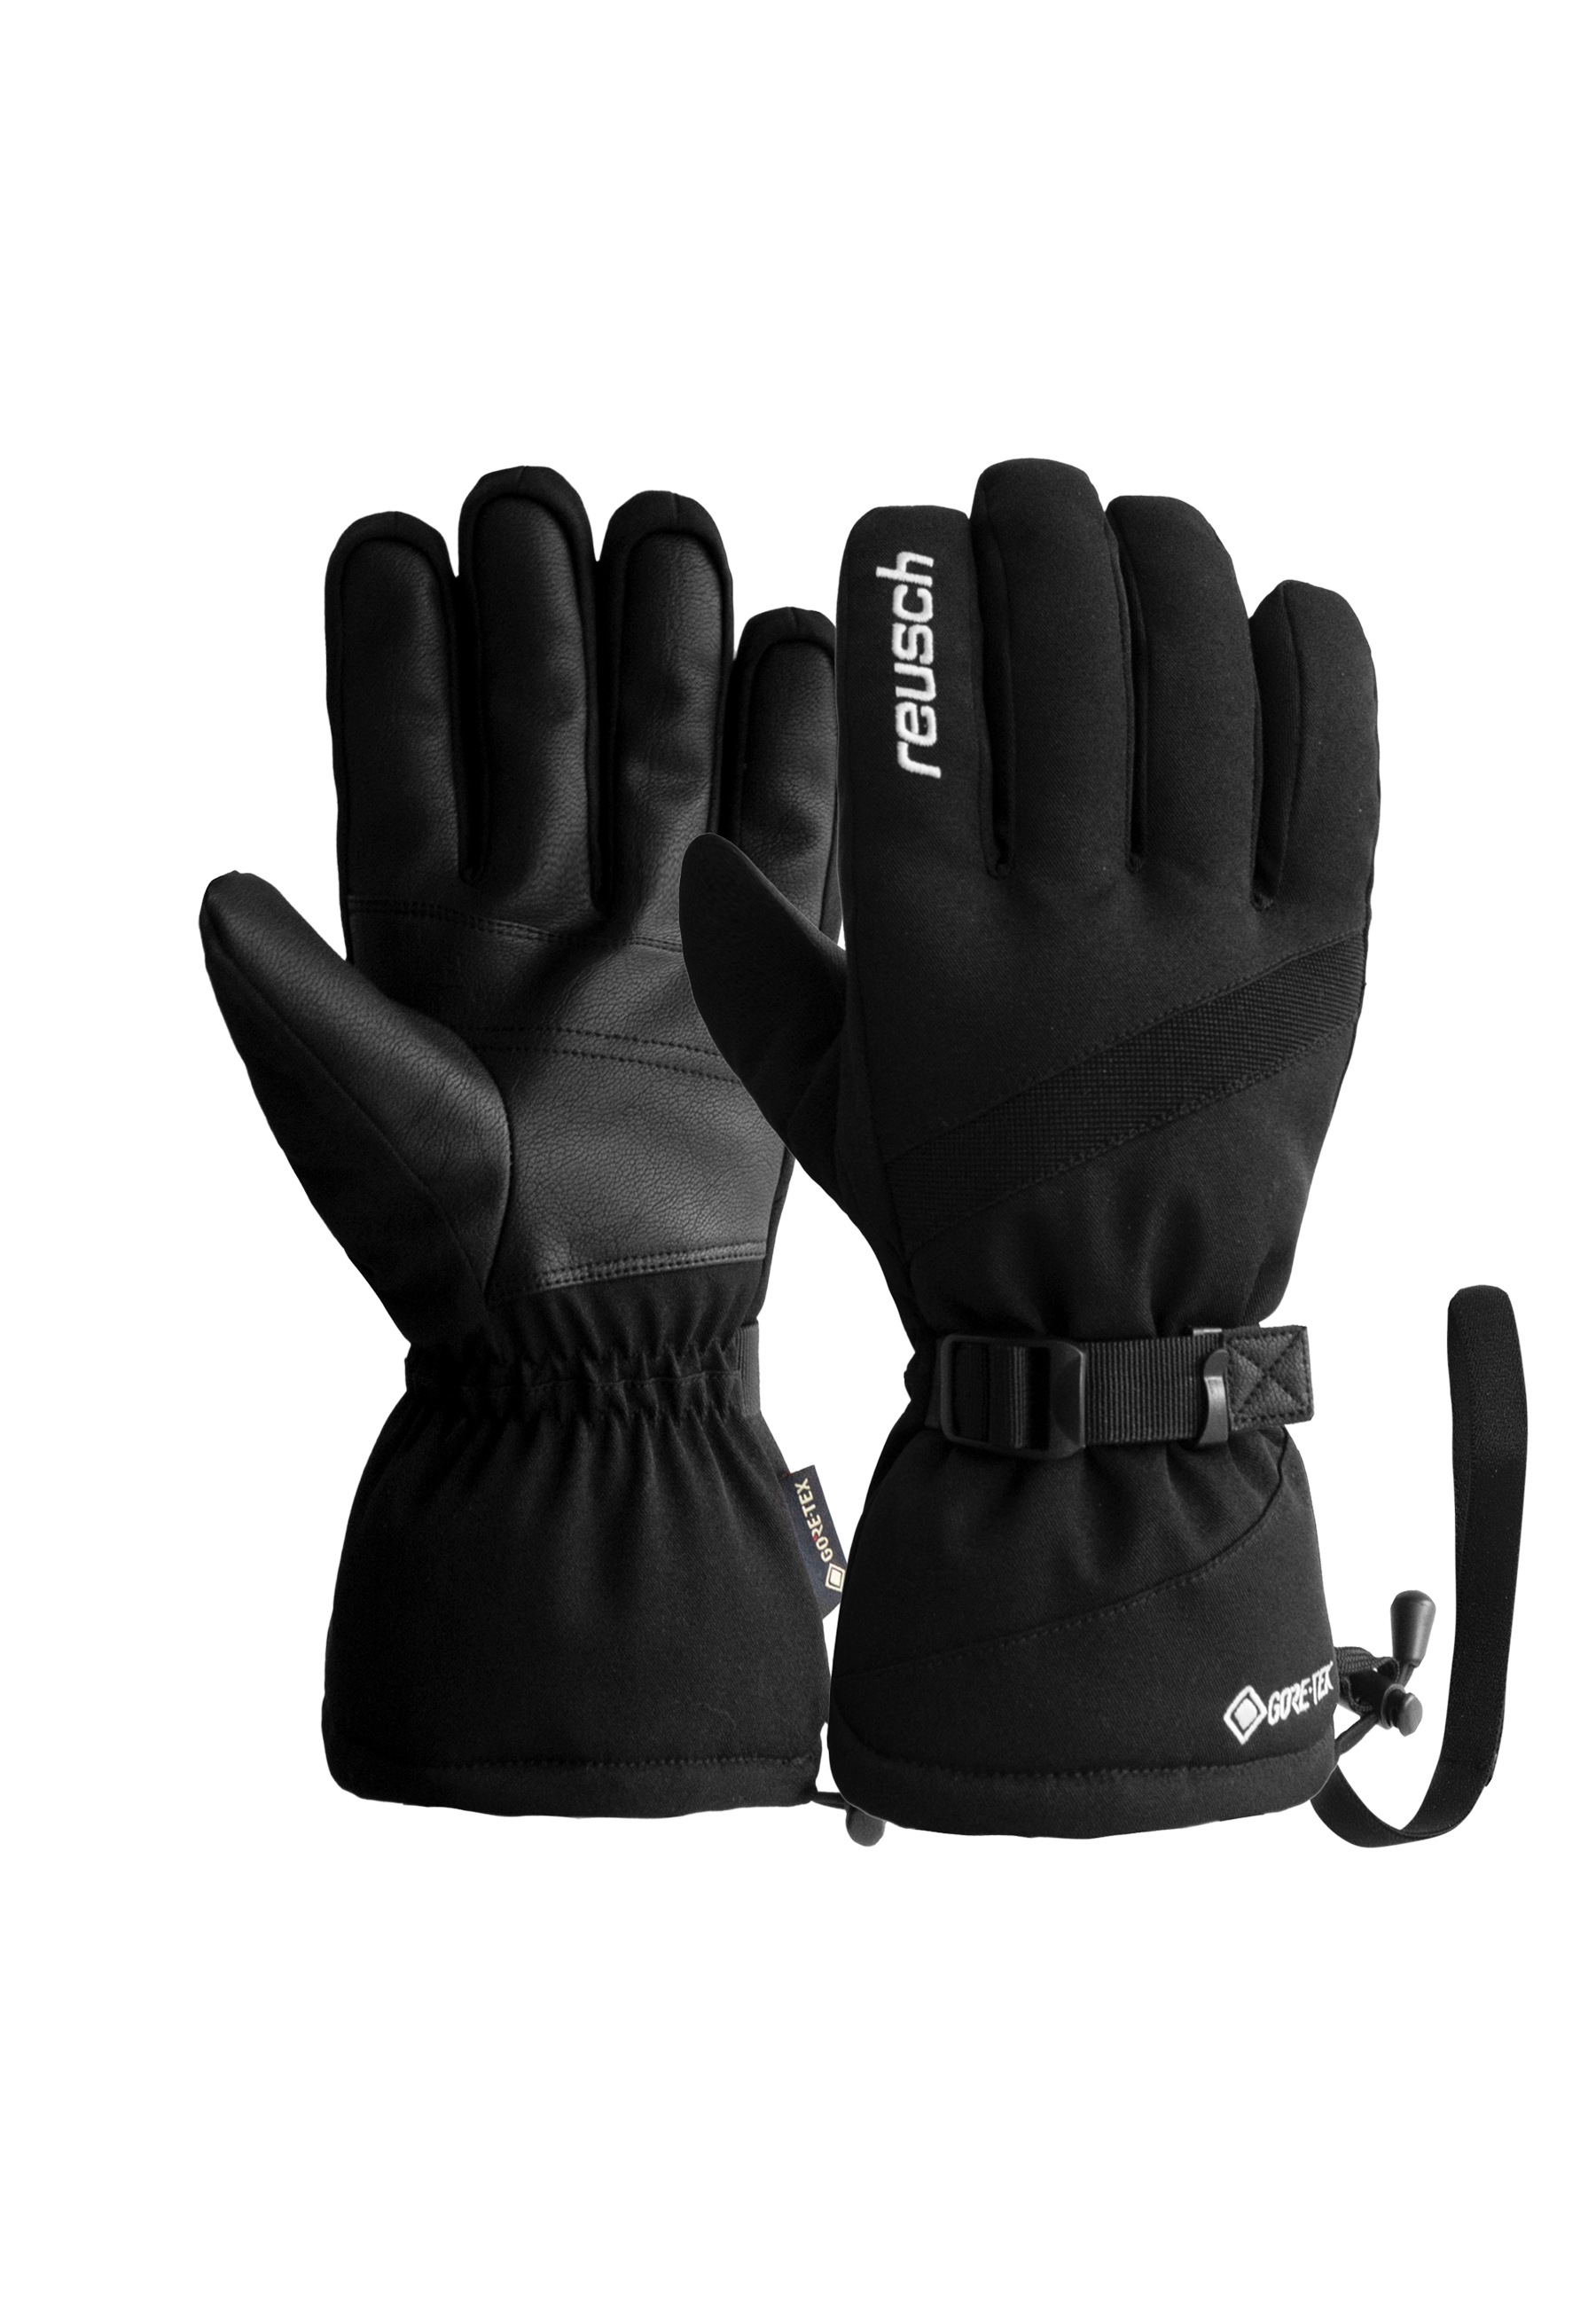 Skihandschuhe »Winter Glove Warm GORE-TEX«, aus wasserdichtem und atmungsaktivem Material